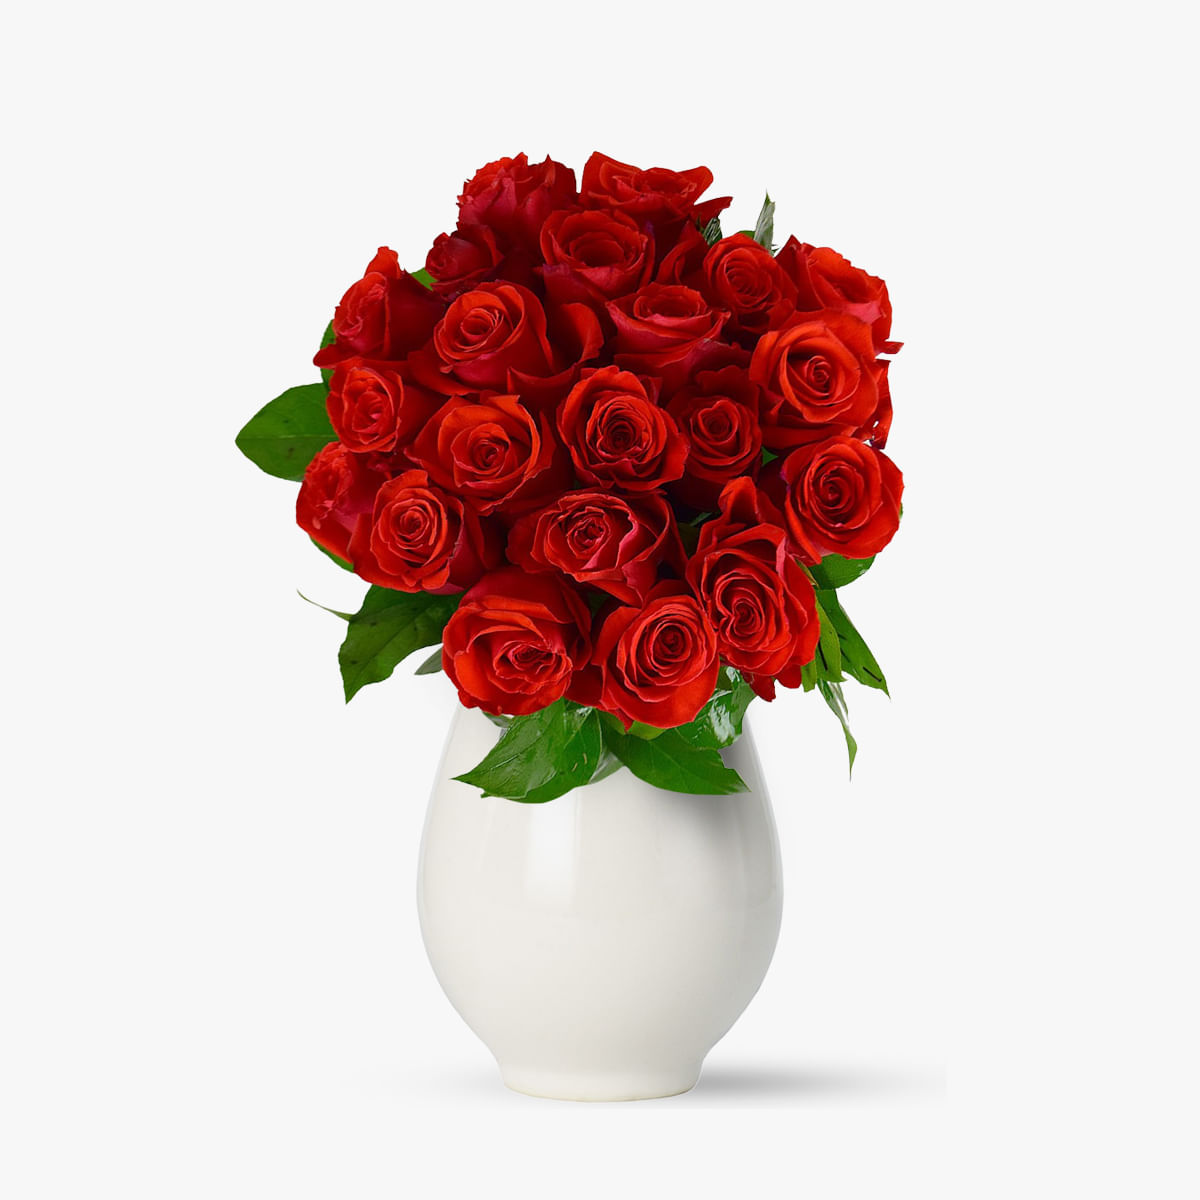 Buchet de 19 trandafiri rosii – Standard Buchet